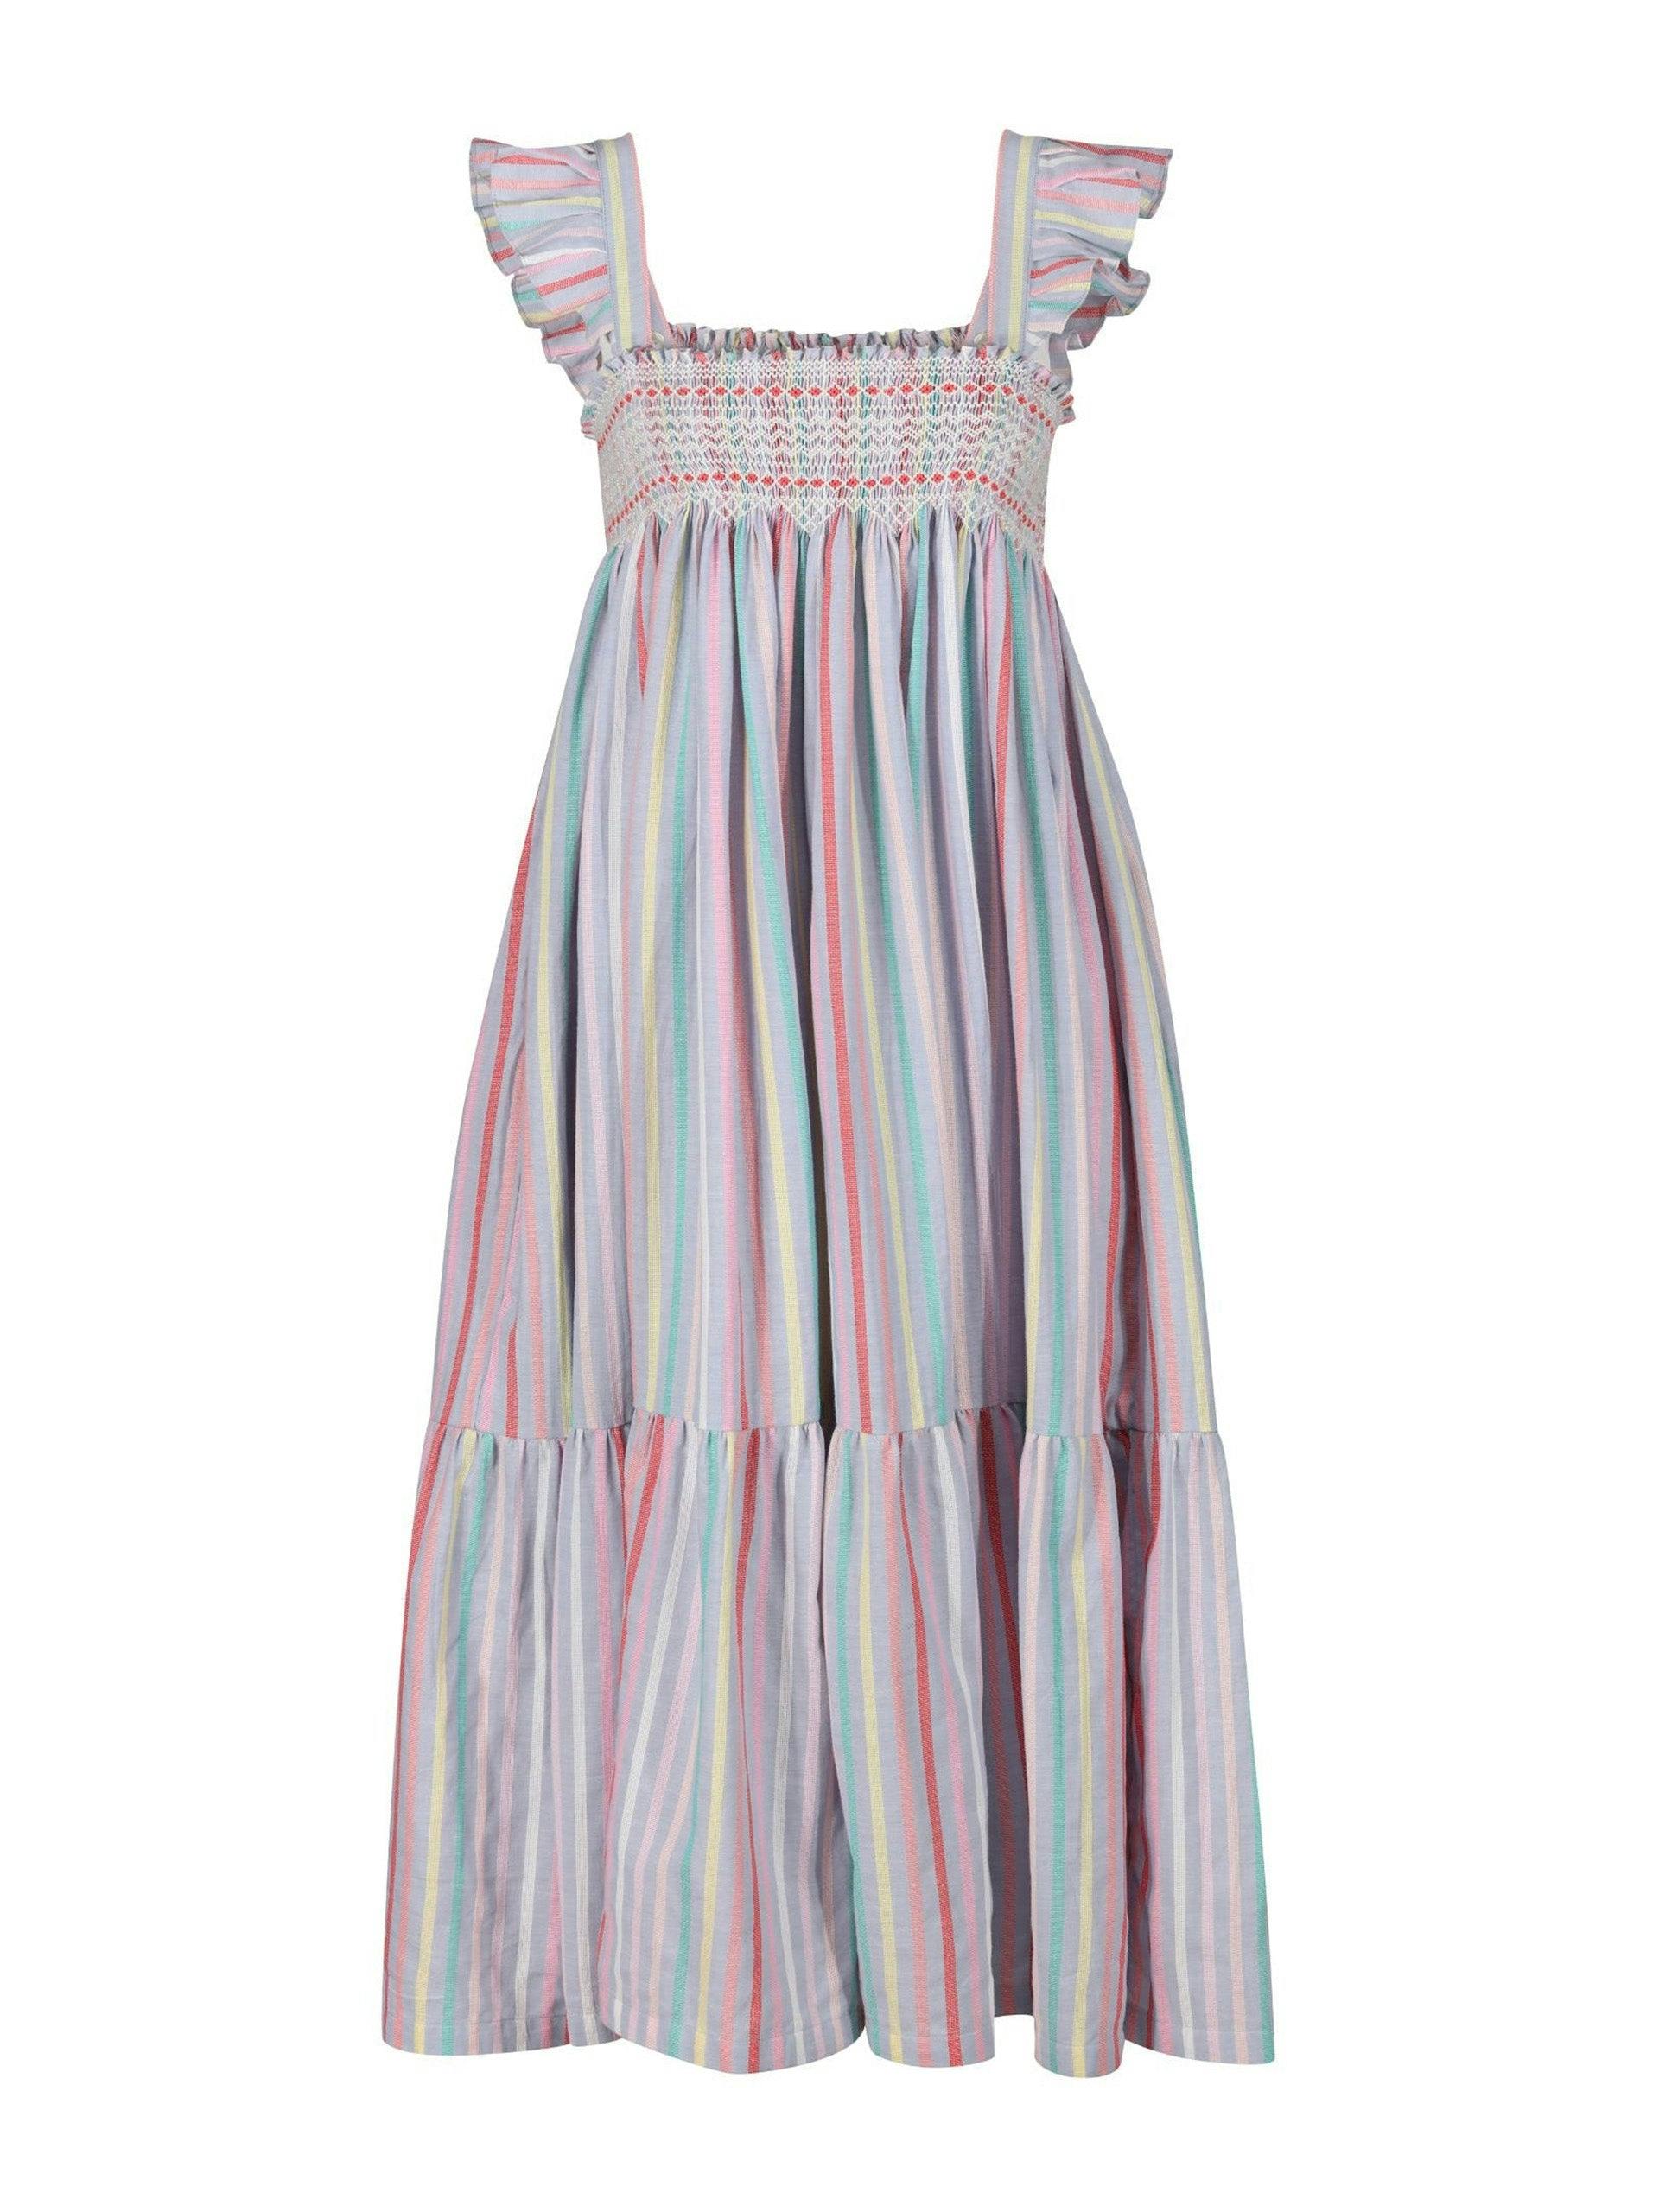 Rainbow stripe Rachel Carson women's dress with cloud hand smocking